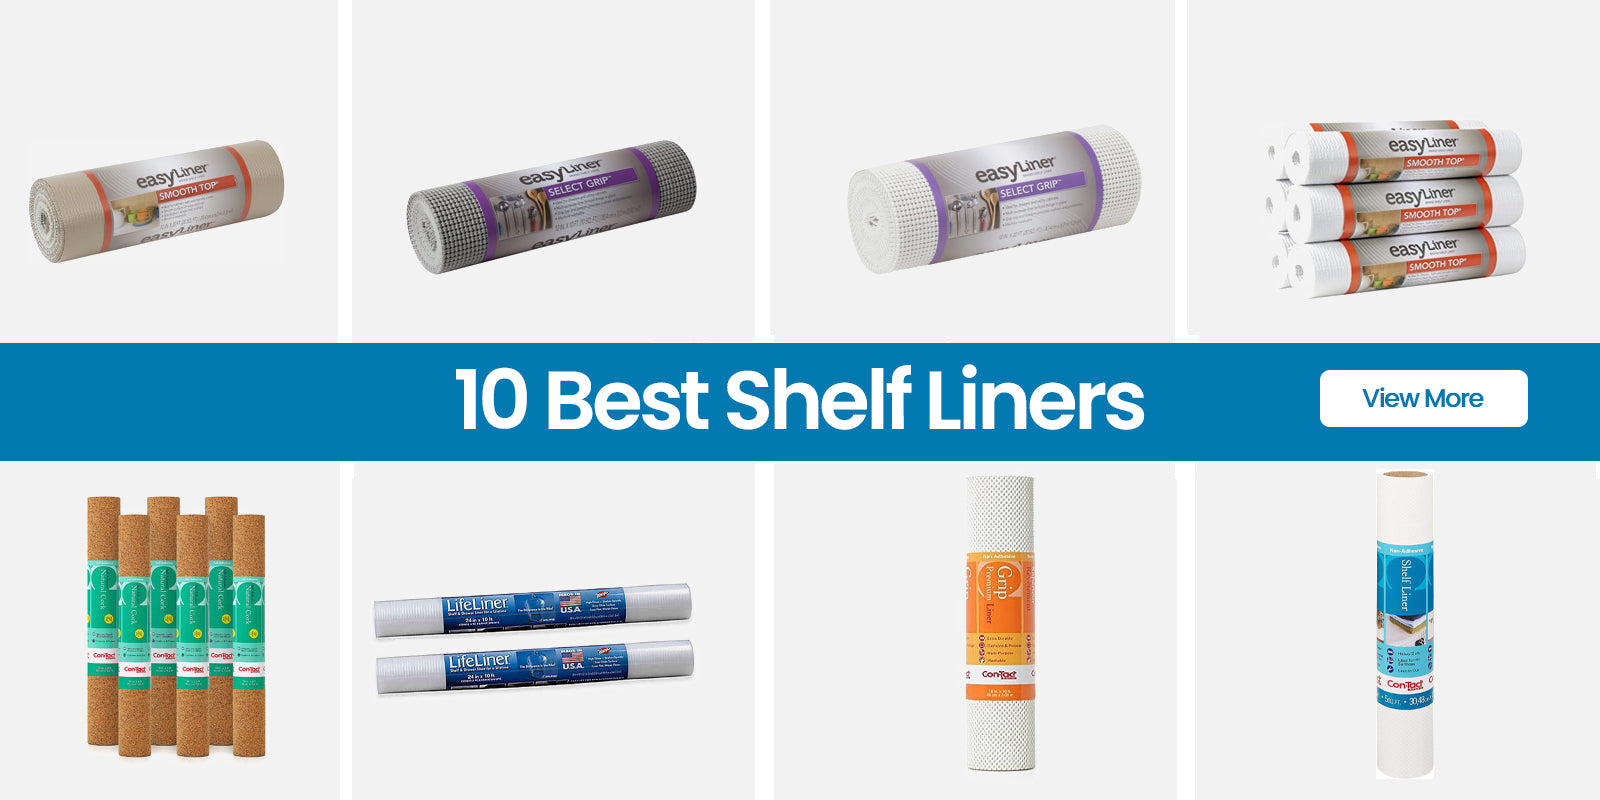 Glomen Shelf Liner, Non-Slip cabinet Liner, Washable Oil-Proof for